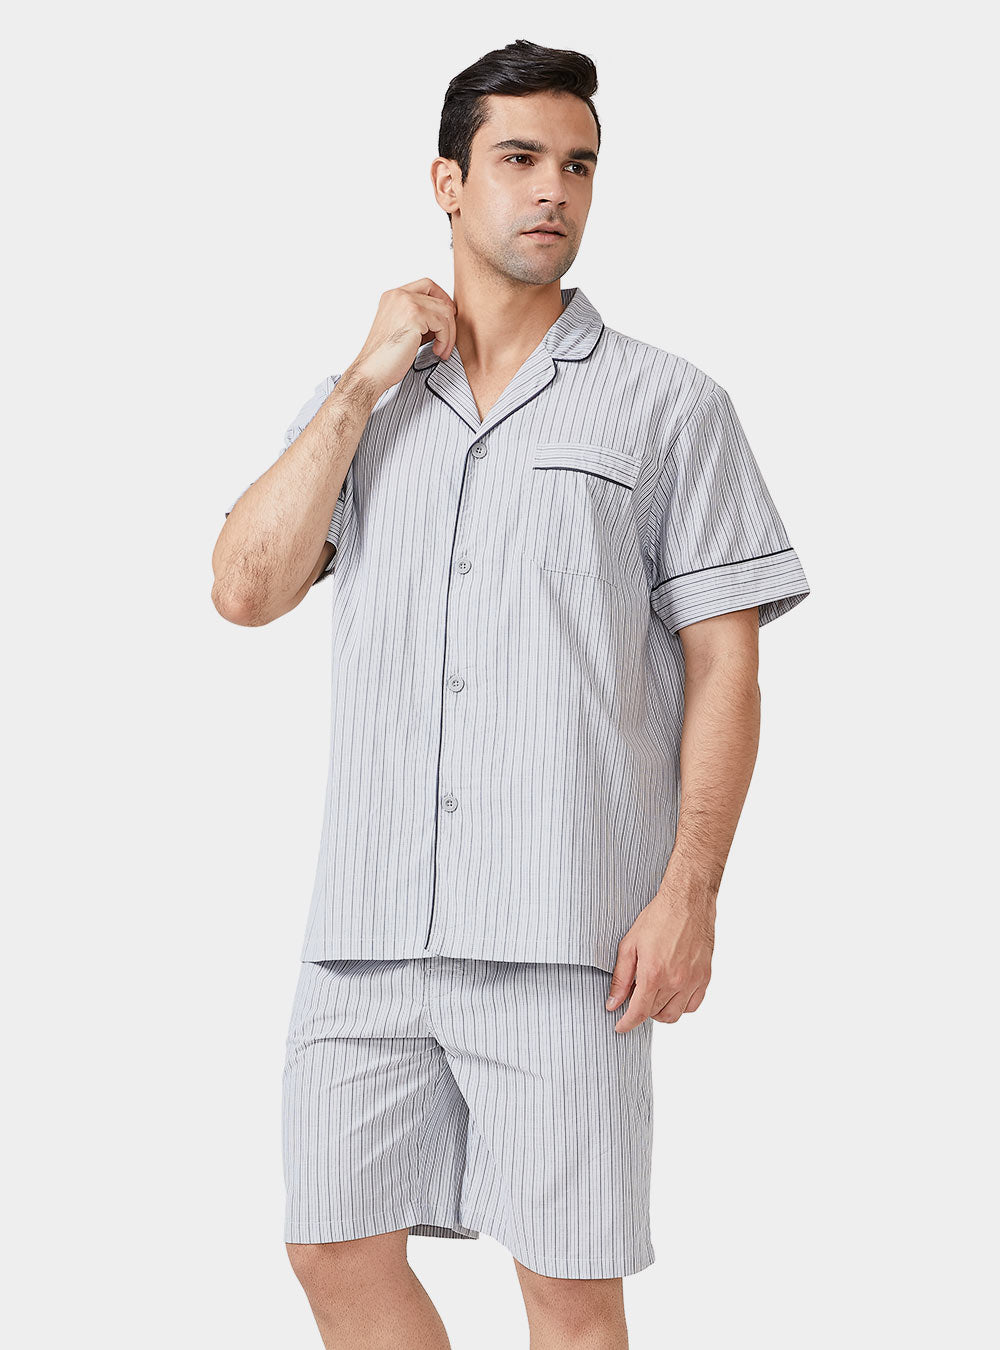 Penn Men's Pajama Shorts Comfy - Soft Lounge Sleep Shorts Separate Bottoms  Light Grey